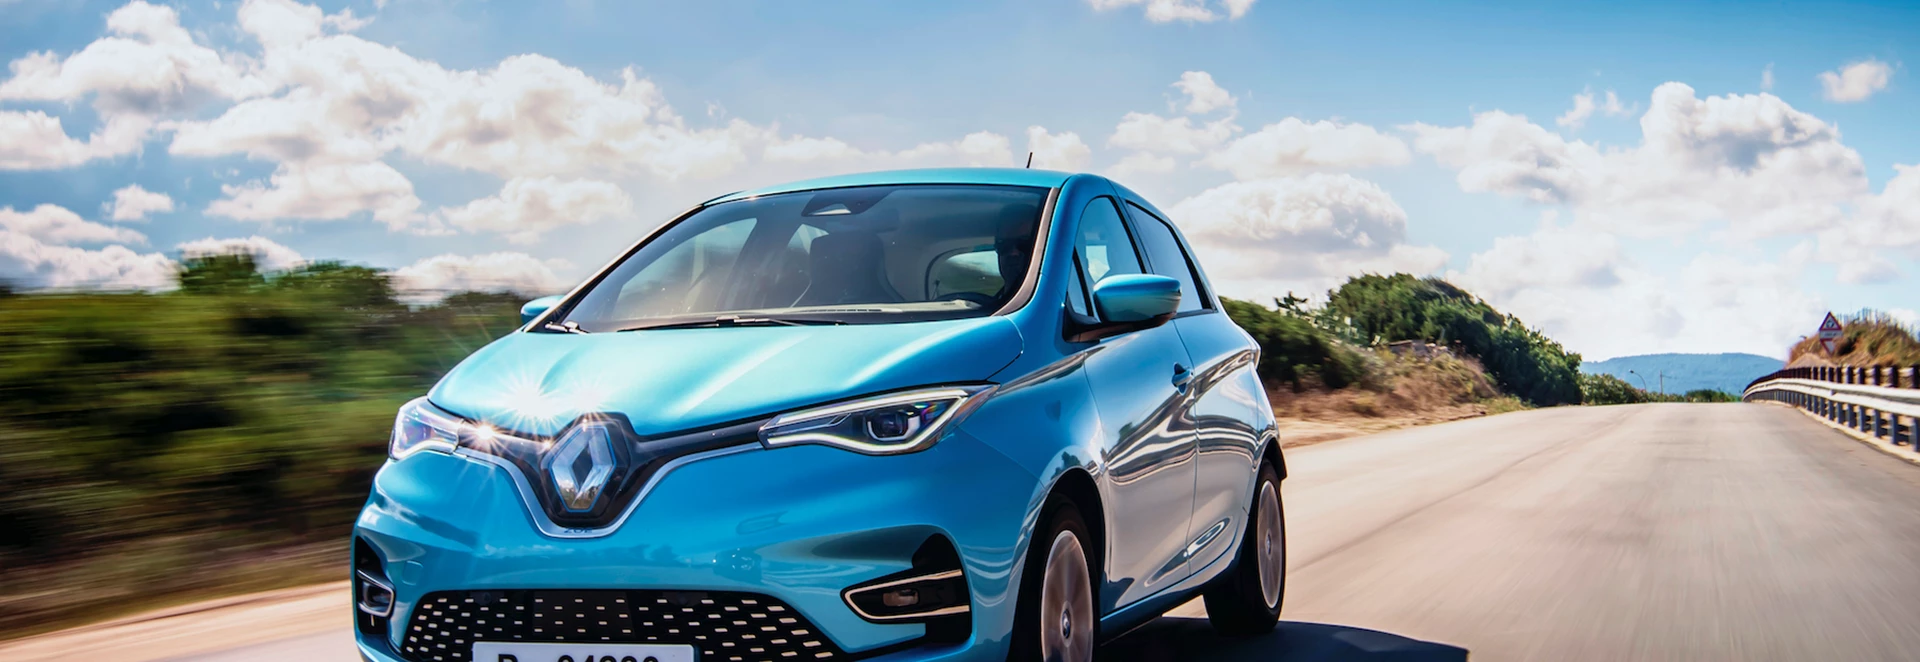 New Renault Zoe scoops major electric car award